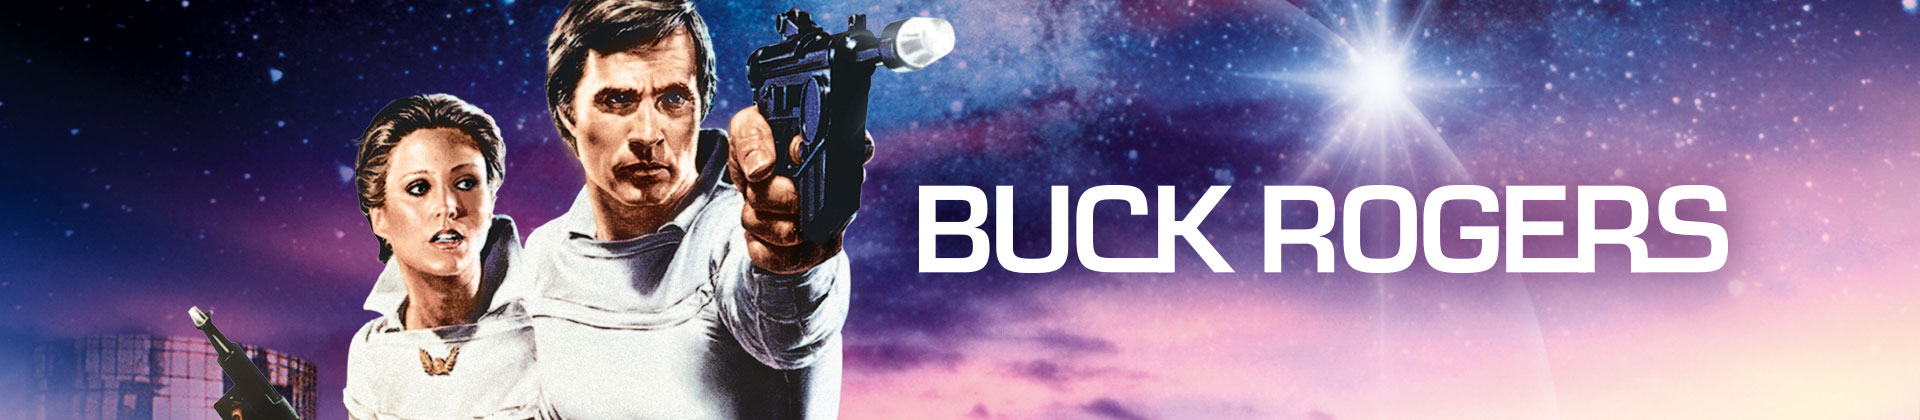 buck rogers complete series amazon